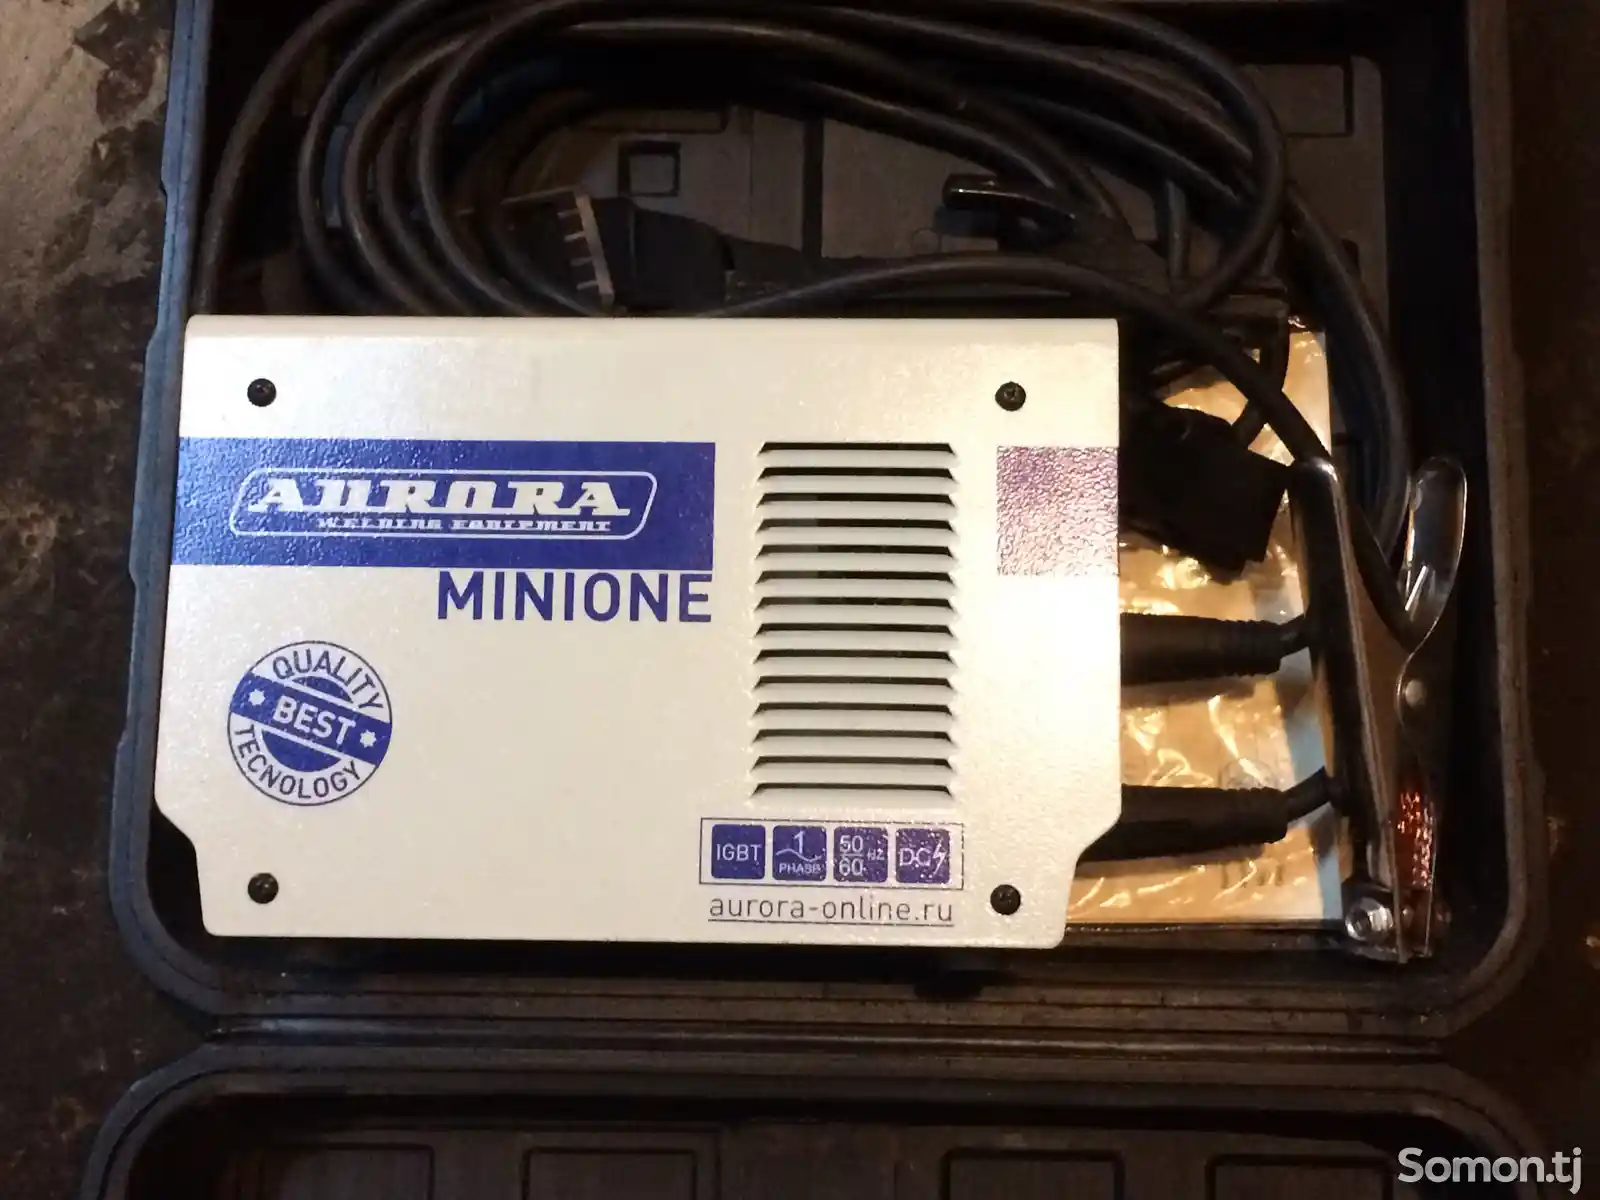 Сварочный аппарат инверторного типа Aurora Minione1600 Case, Mma-2